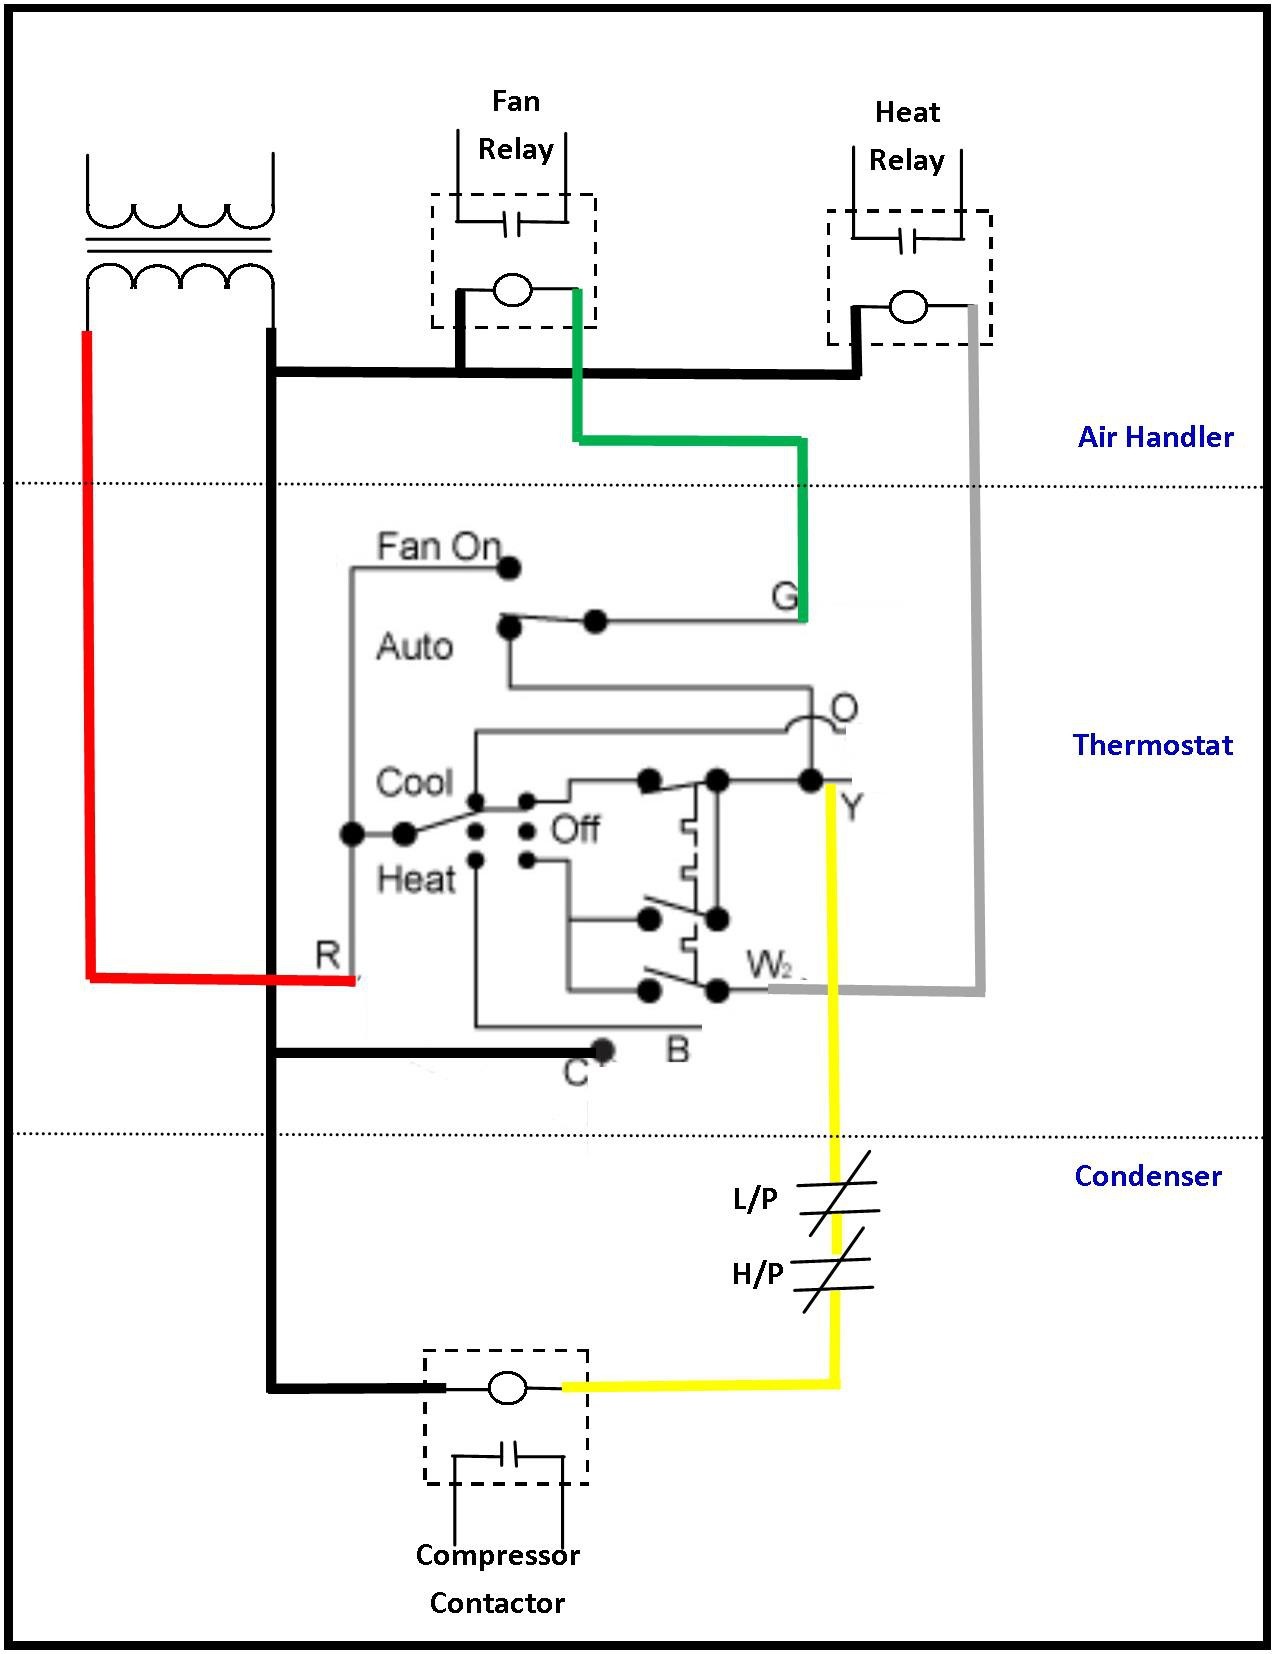 Ac Wiring Diagram thermostat Basic Gas Furnace Wiring Diagram Of Ac Wiring Diagram thermostat